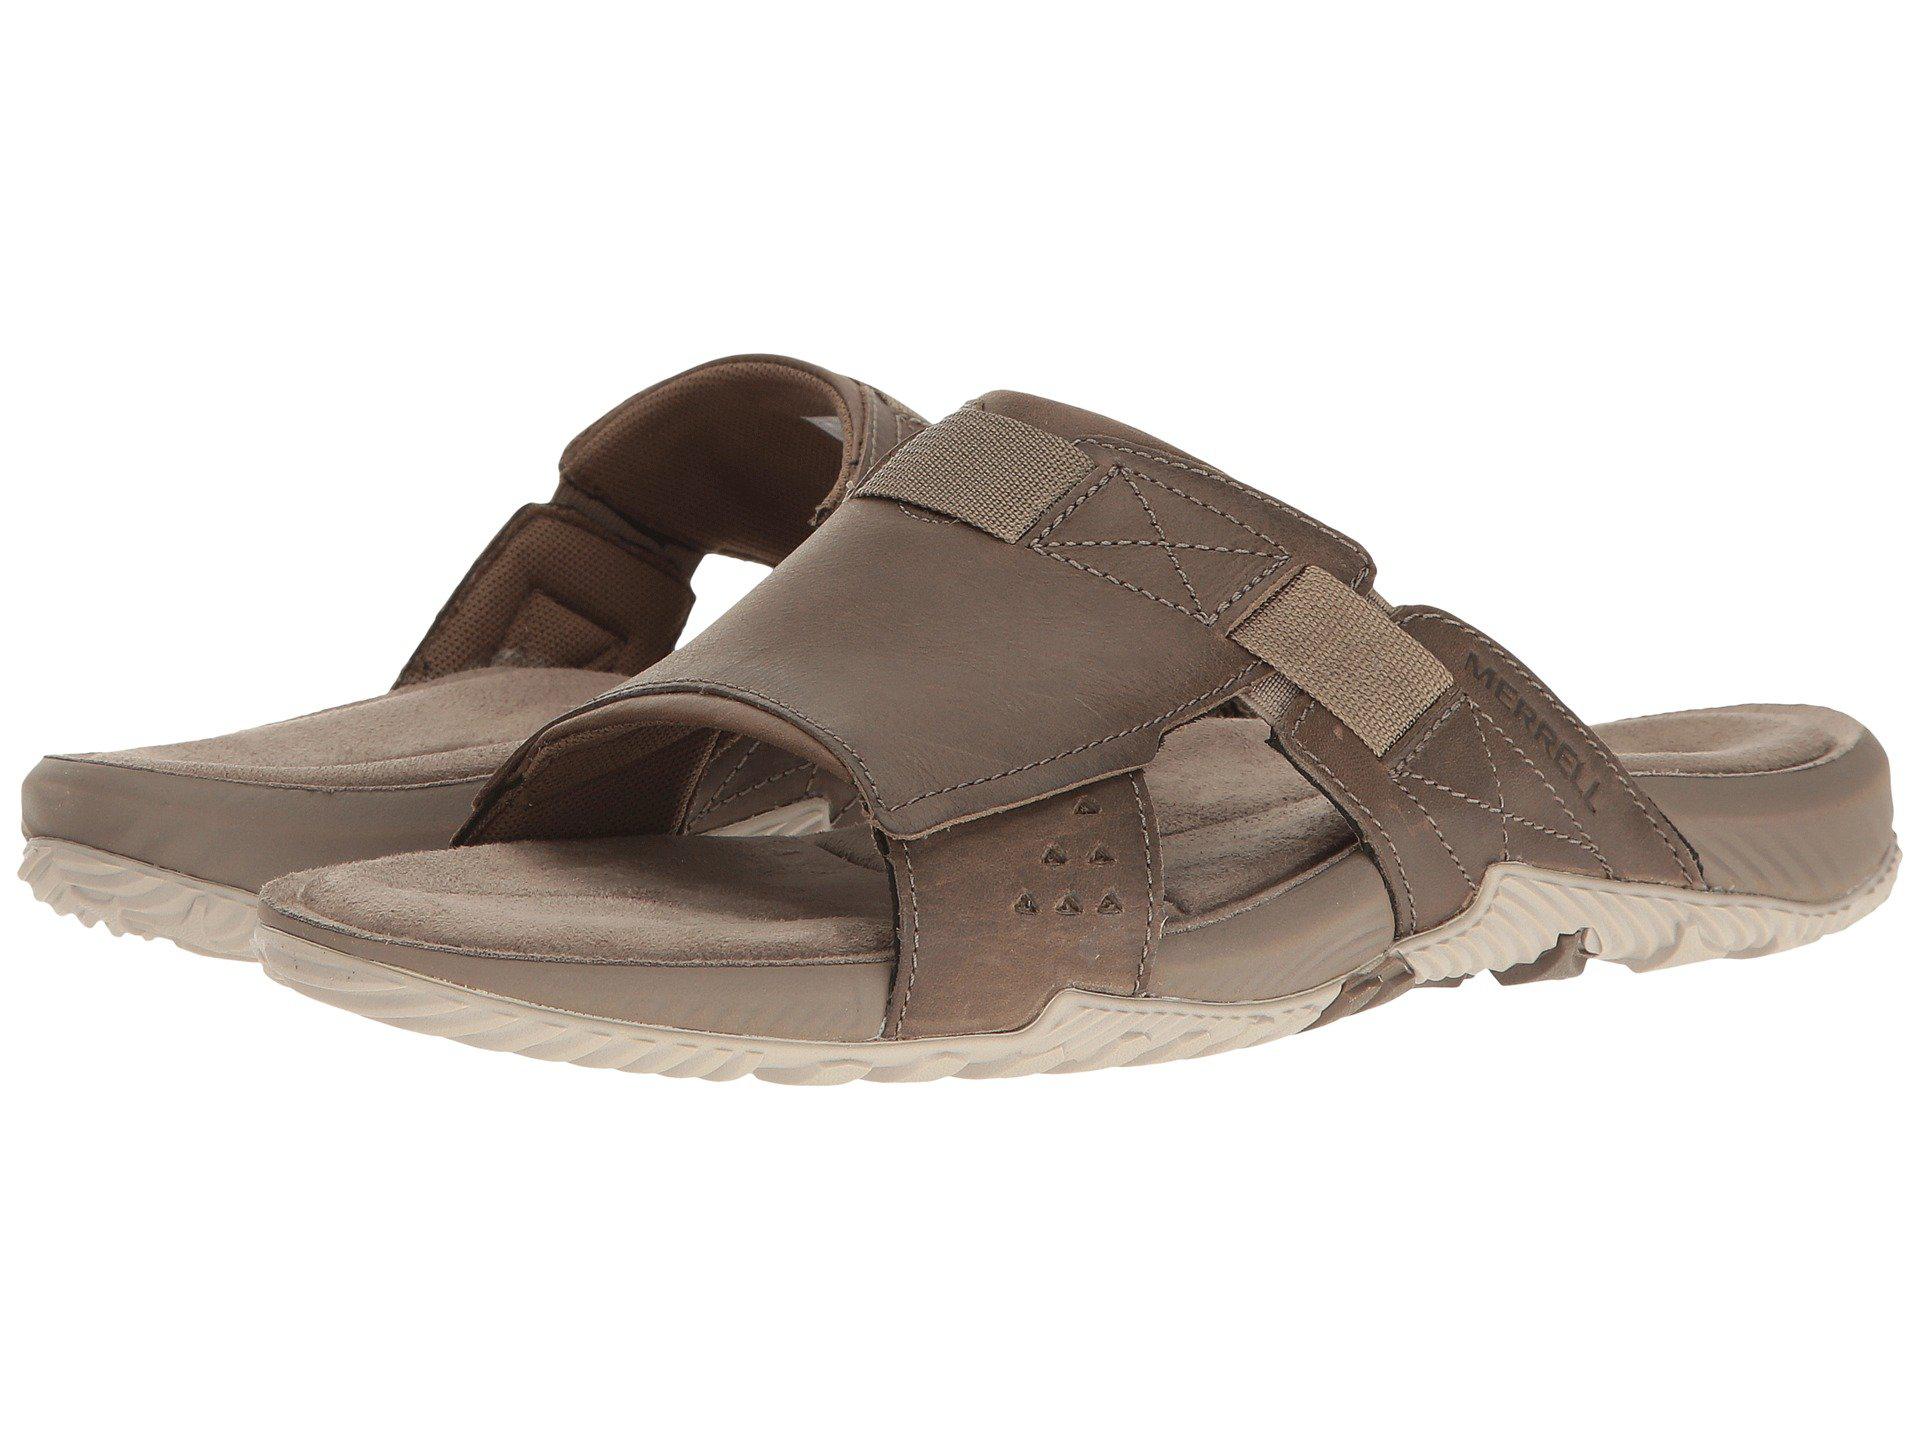 Terrant Slide Open Toe Sandals in for Lyst